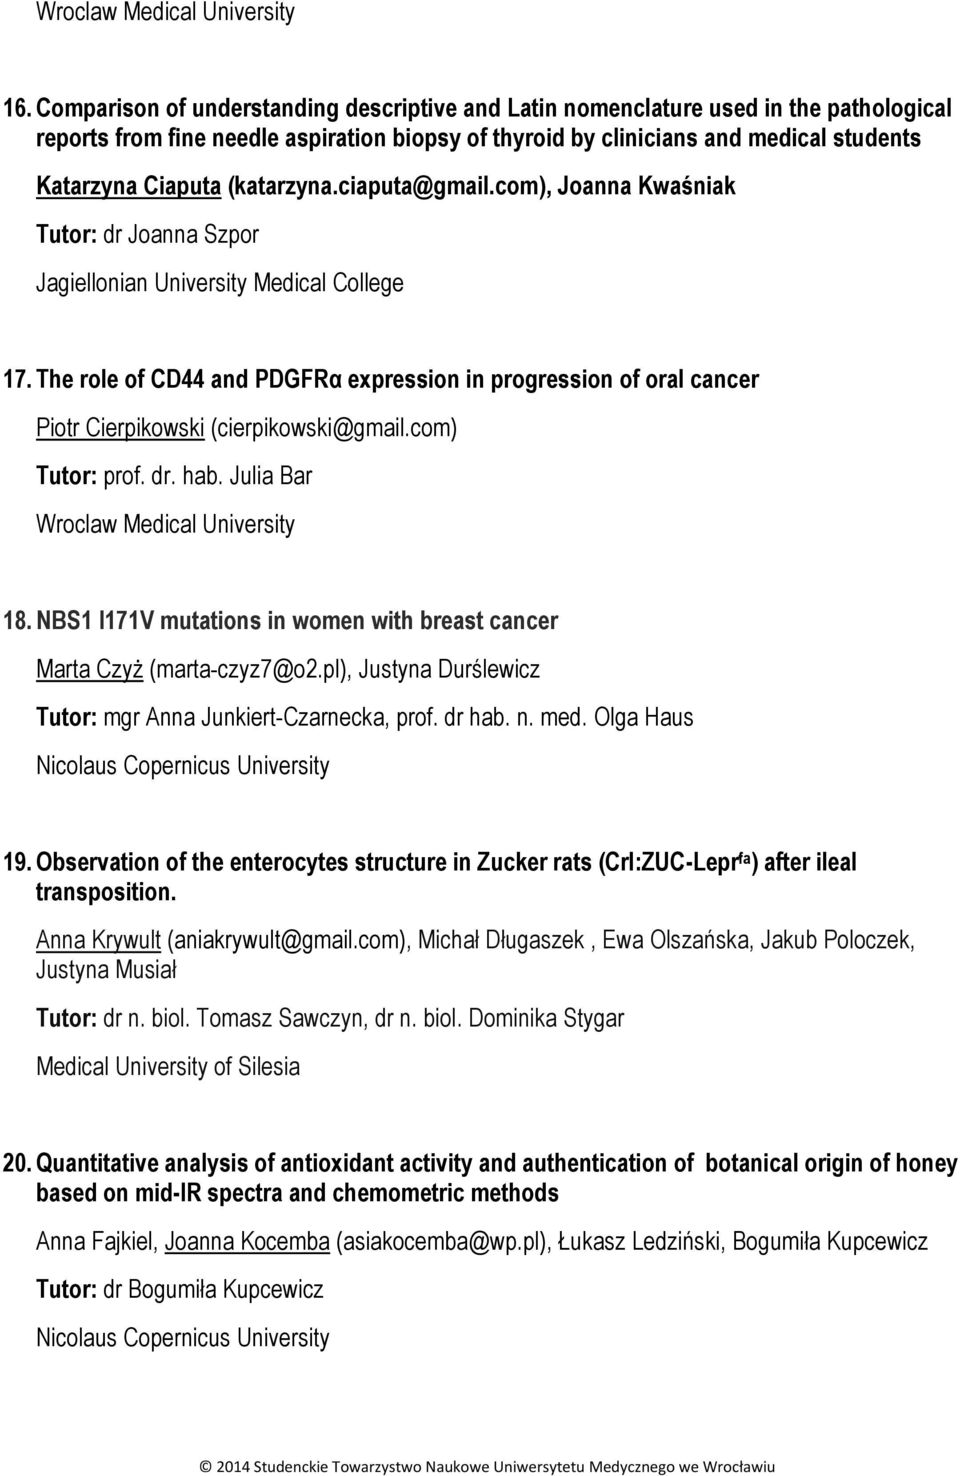 The role of CD44 and PDGFRα expression in progression of oral cancer Piotr Cierpikowski (cierpikowski@gmail.com) Tutor: prof. dr. hab. Julia Bar 18.